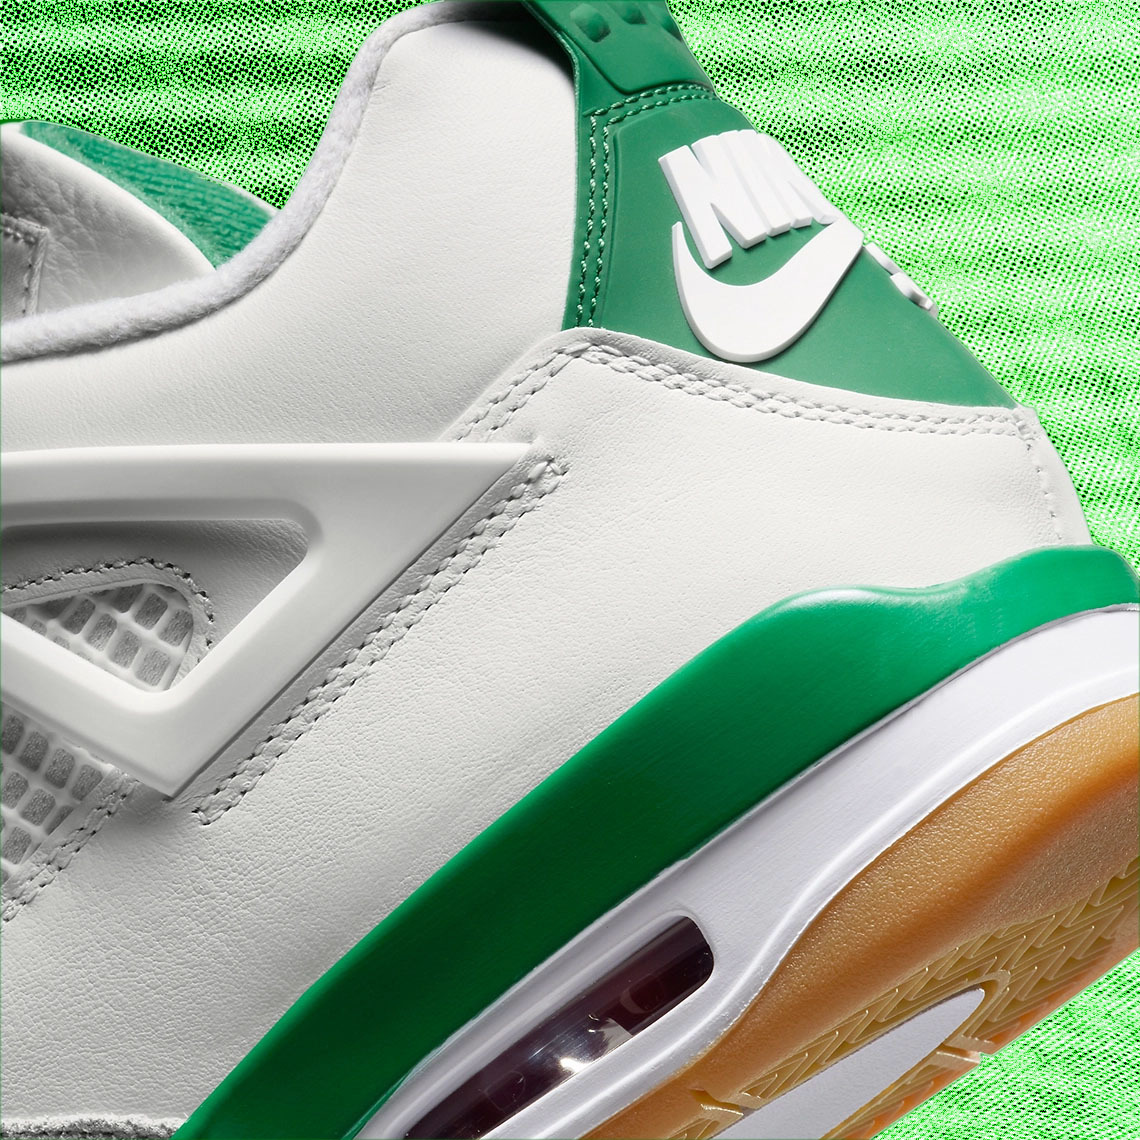 The Nike SB x Air Jordan 4 "Pine Green"